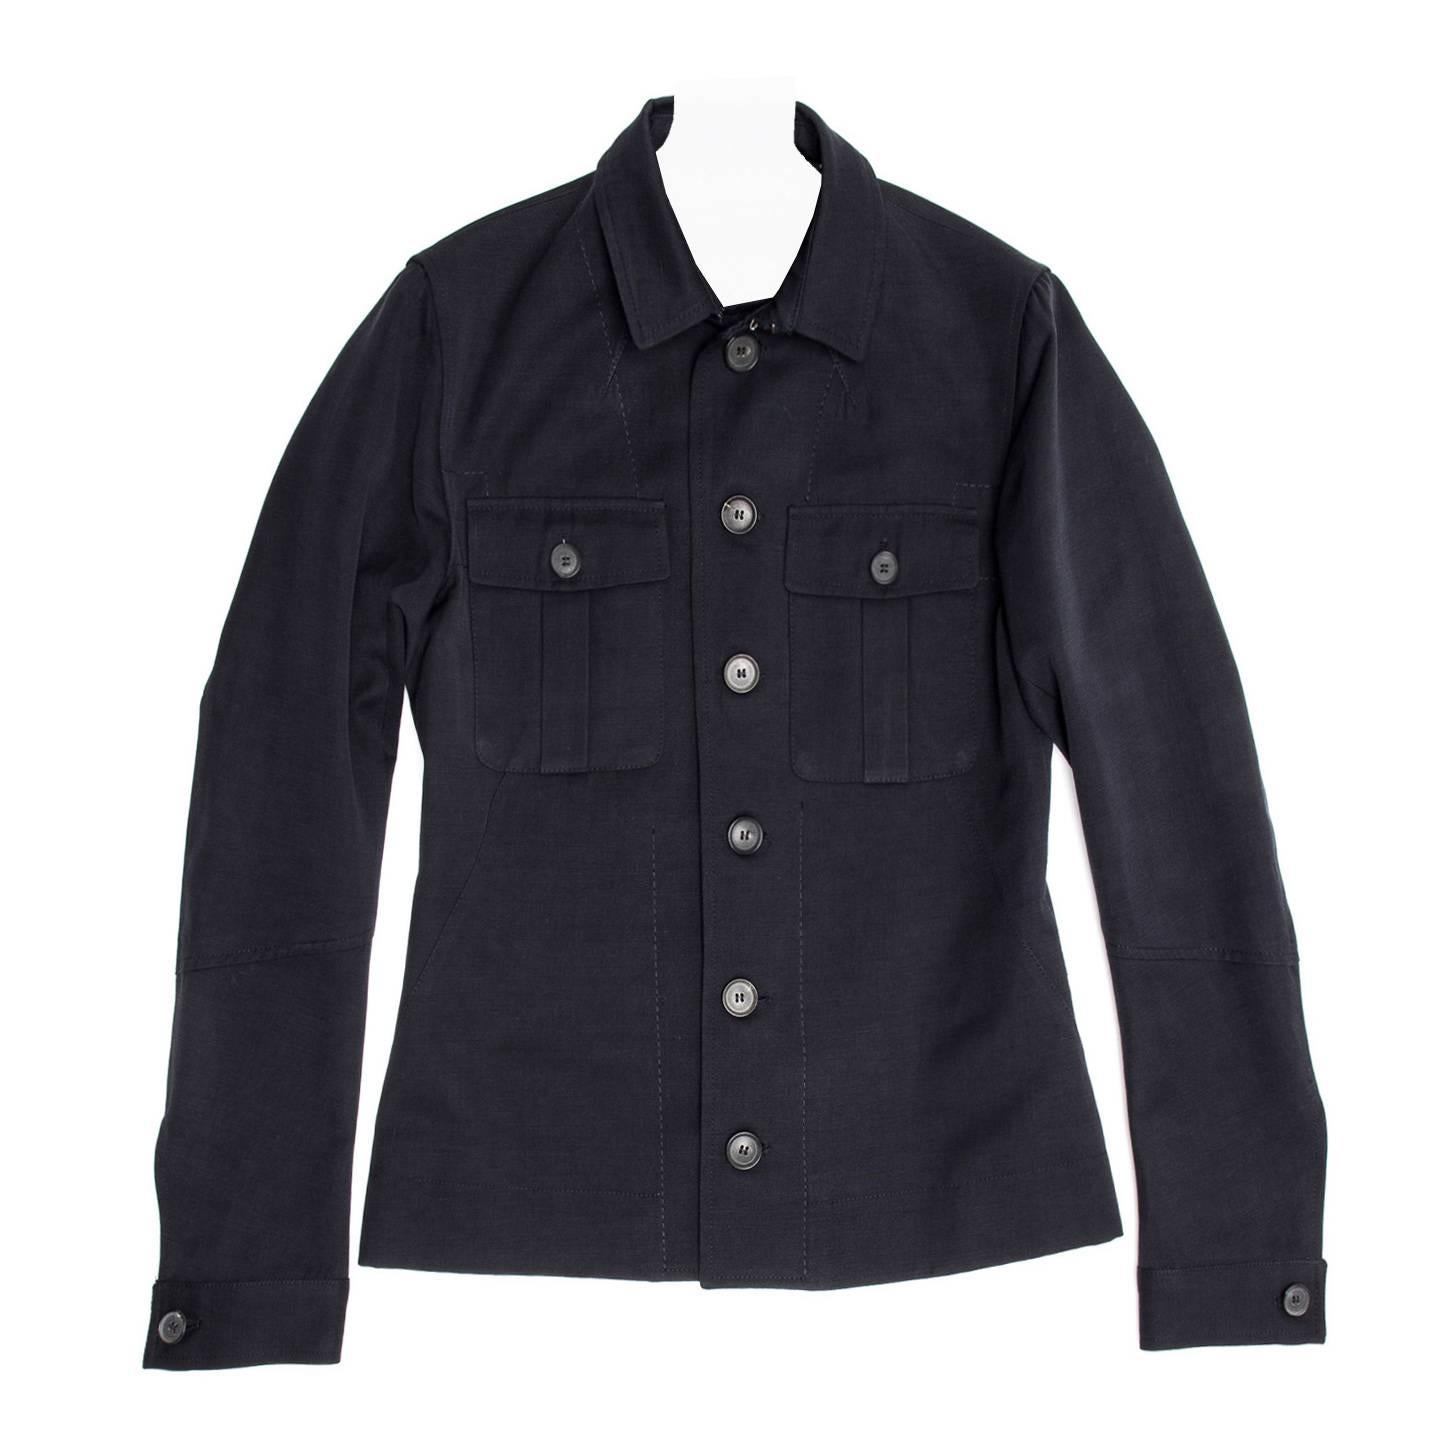 Kinder Fashion Design Navy Cotton Casual Jacket For Sale